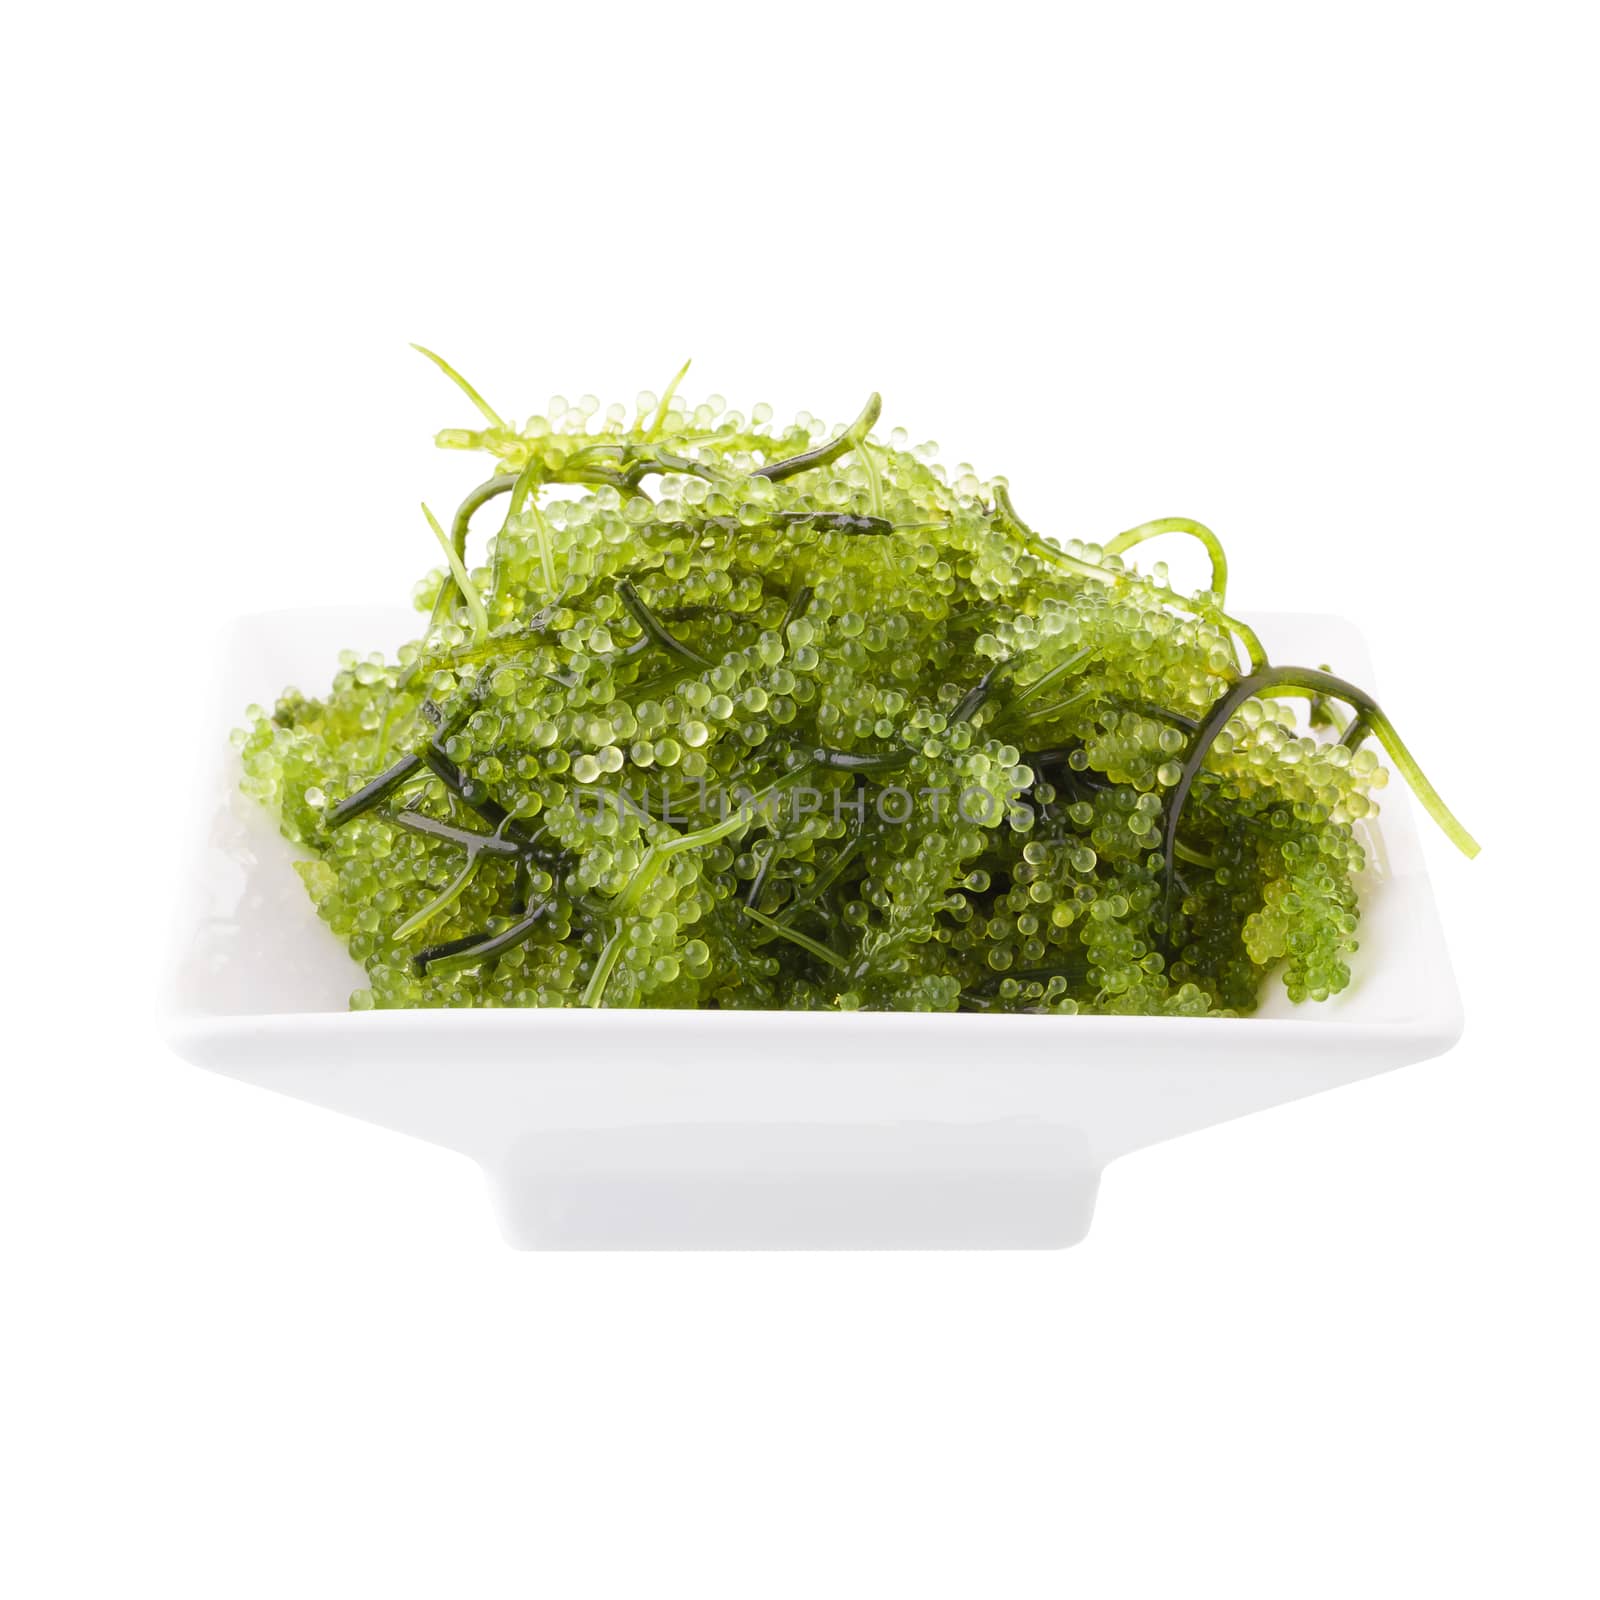 Umi-budou, Seaweed , Healthy sea food. Oval sea grapes seaweed. Healthy Food, Close up Green Caviar on white background.